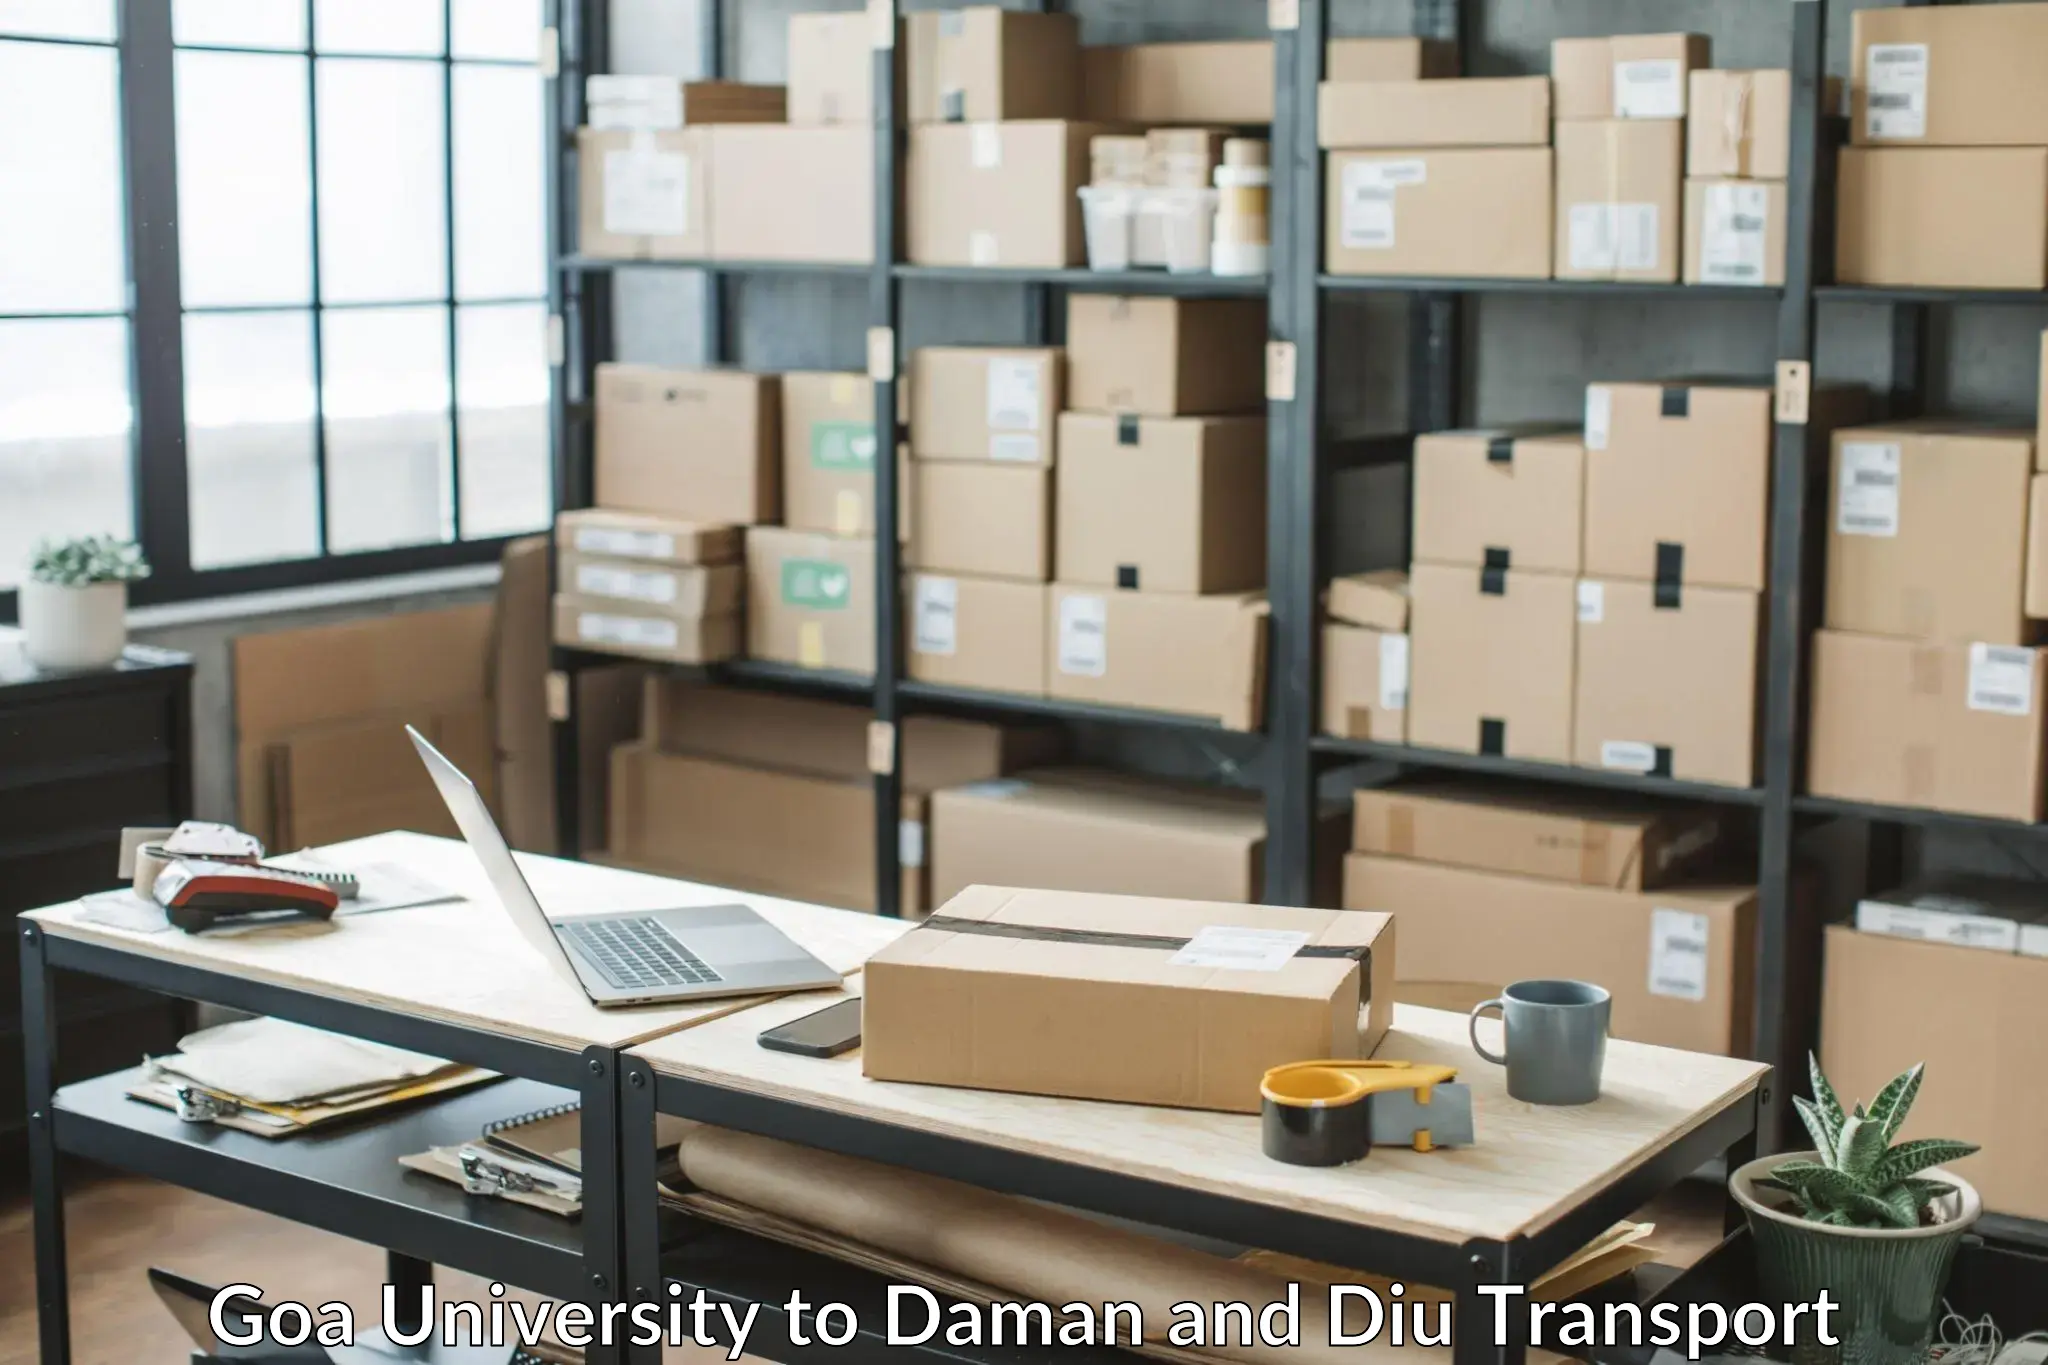 Online transport service Goa University to Daman and Diu